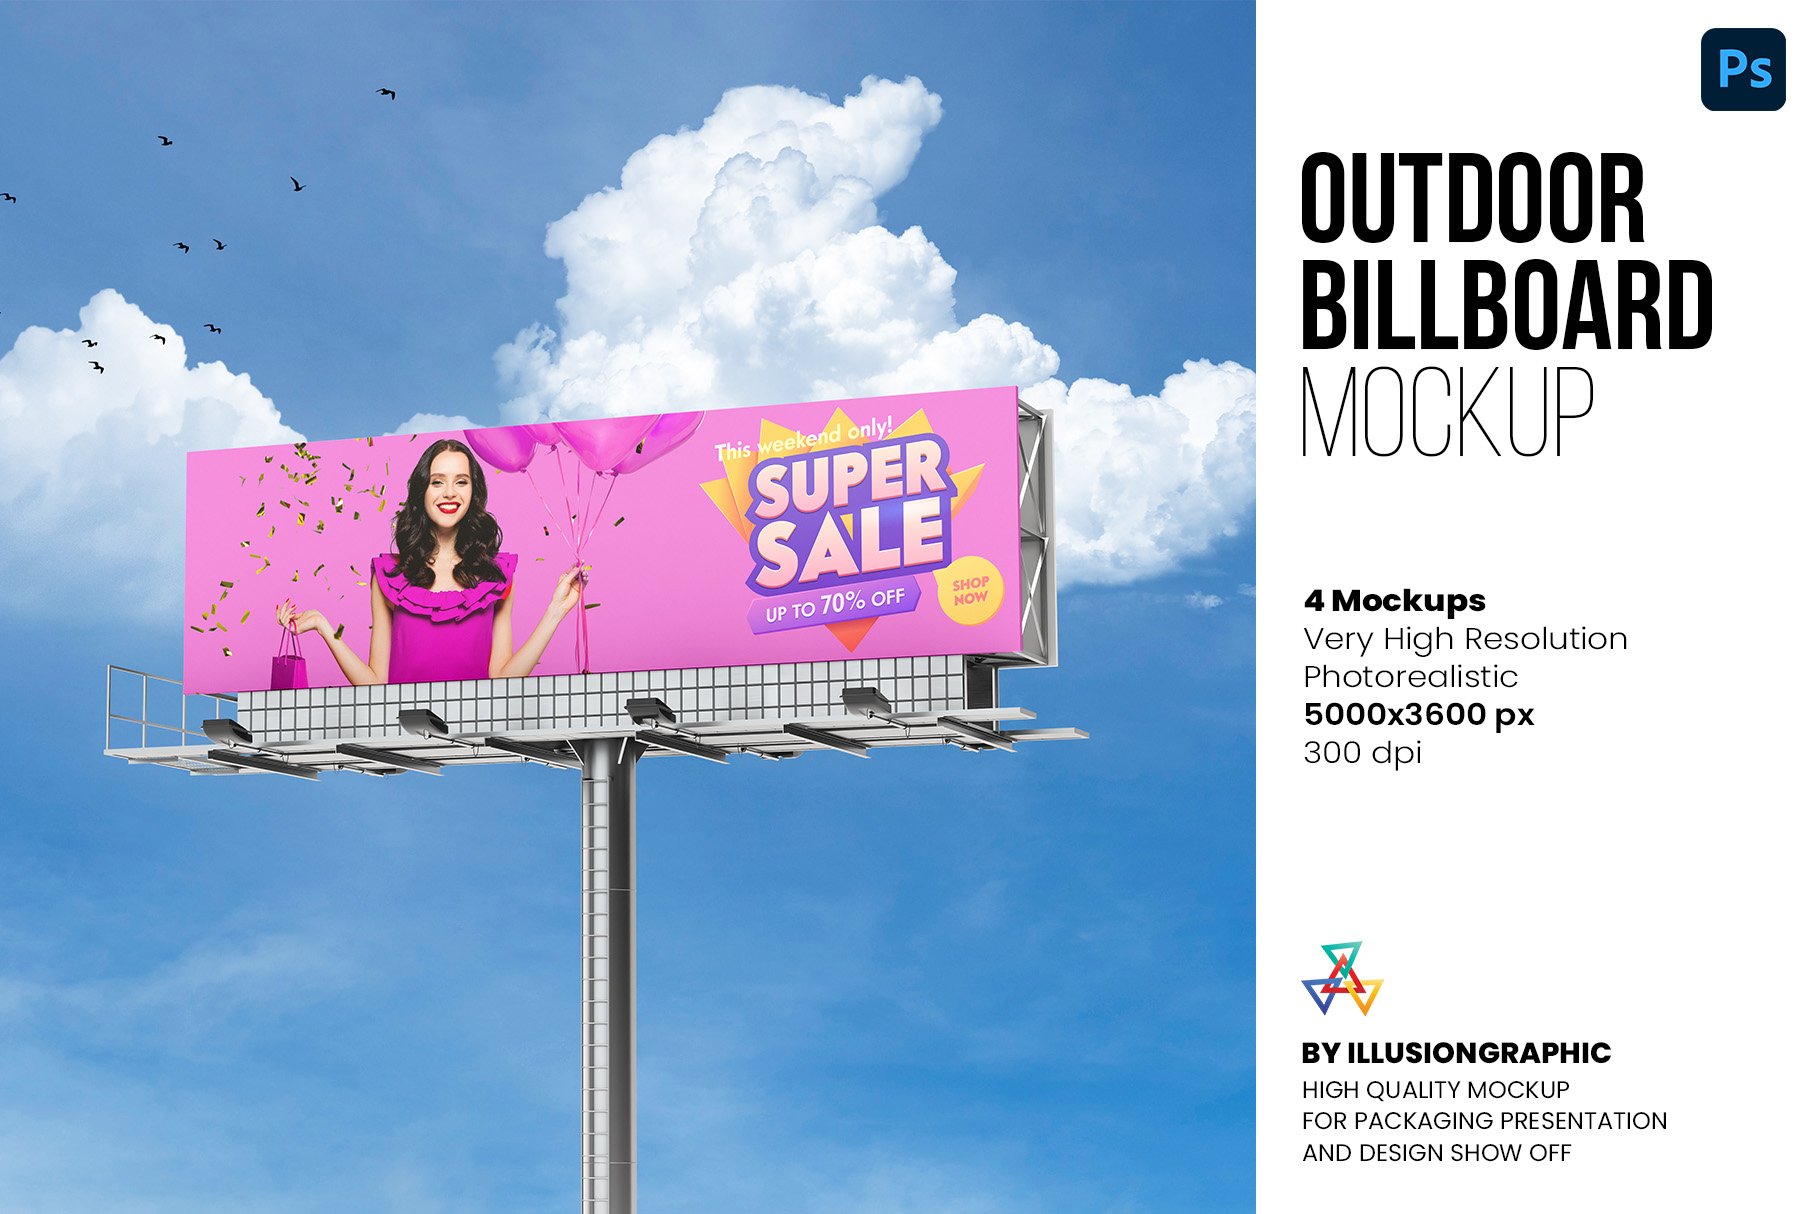 Outdoor Billboard Mockups - 4 views cover image.